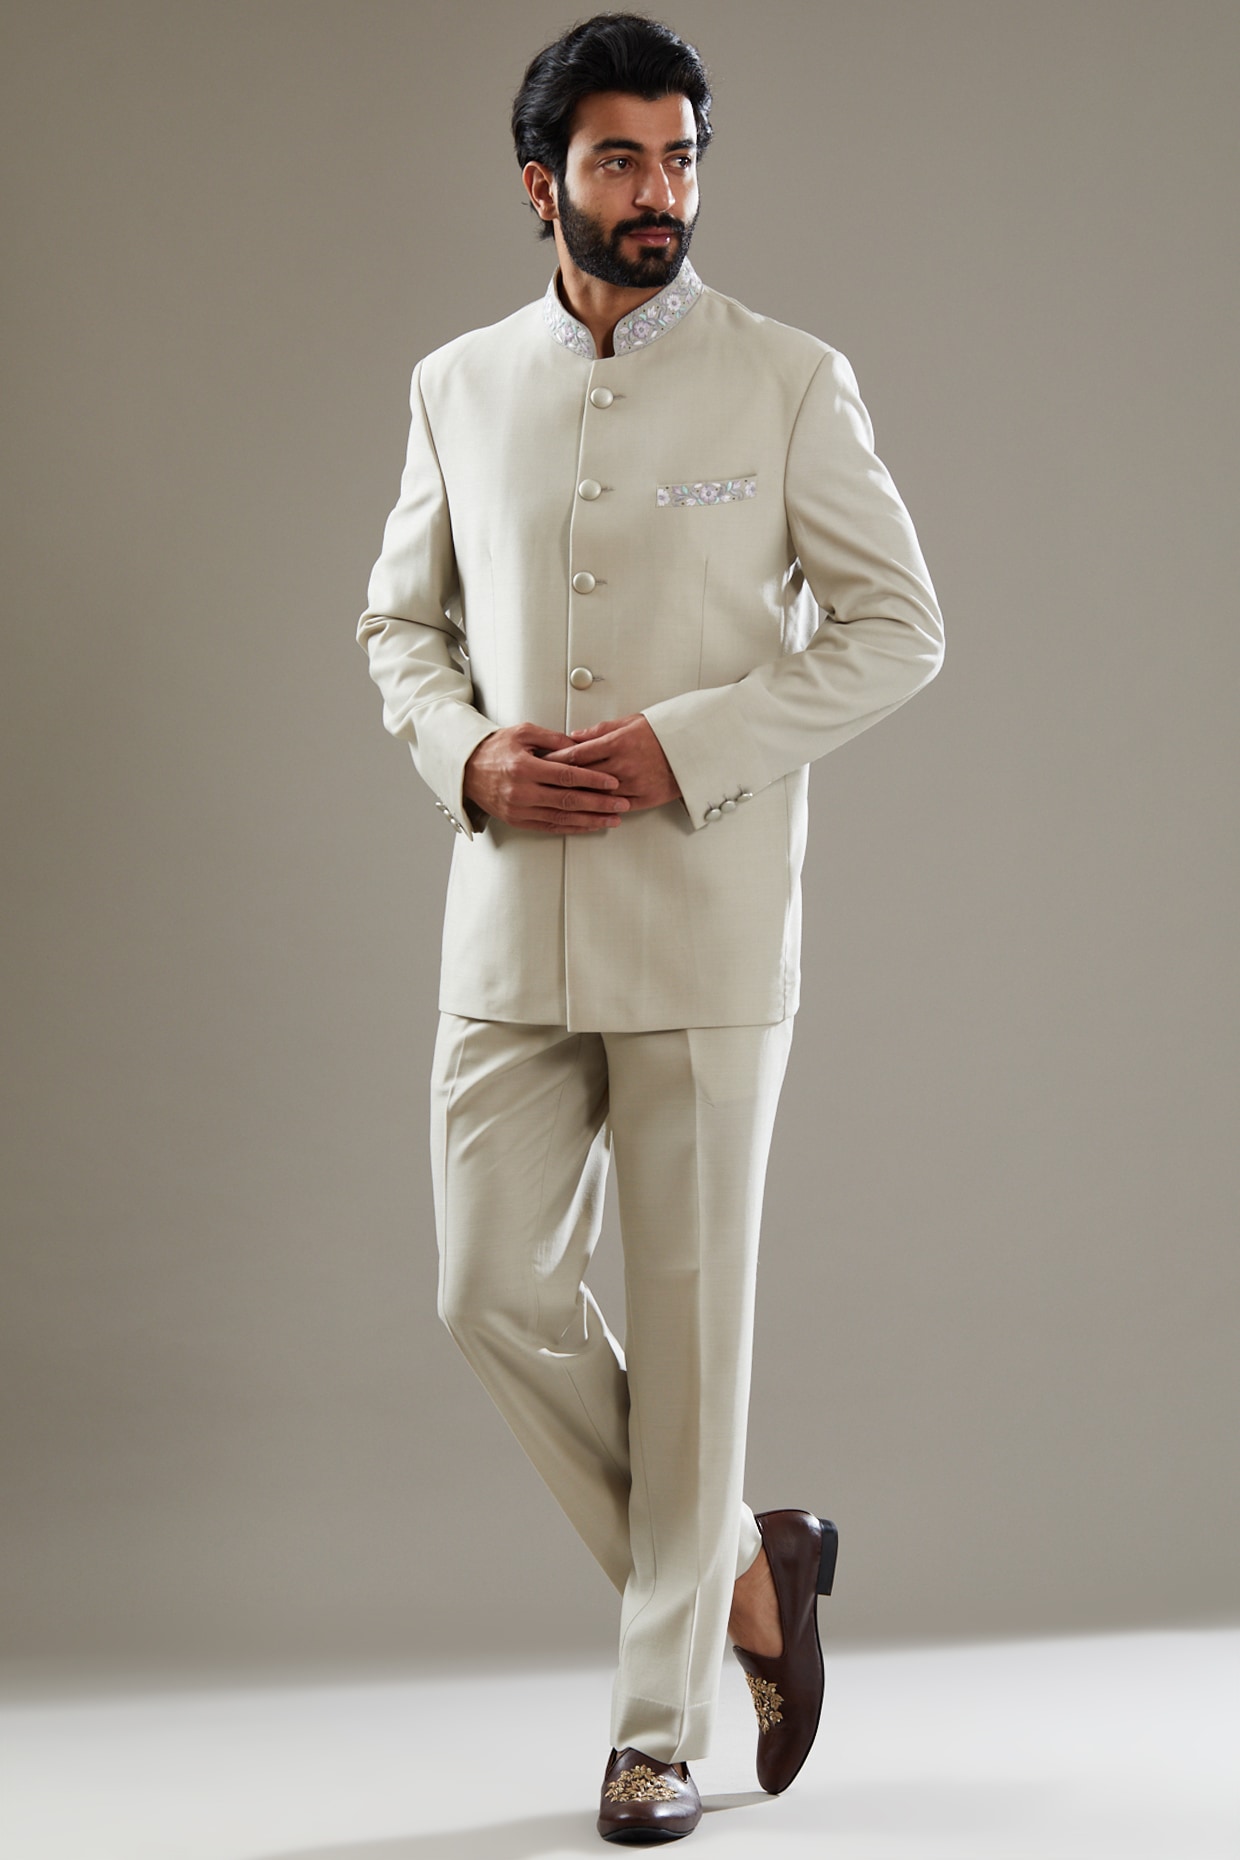 Buy Luxury Men Ethnic Designer Jodhpuri 2 Piece Blue Floral White Pants  Style Groom Wedding Suits Formal Fashion Suits Bespoke for Men Online in  India - Etsy | Suit fashion, Fashion pants, Wedding suits